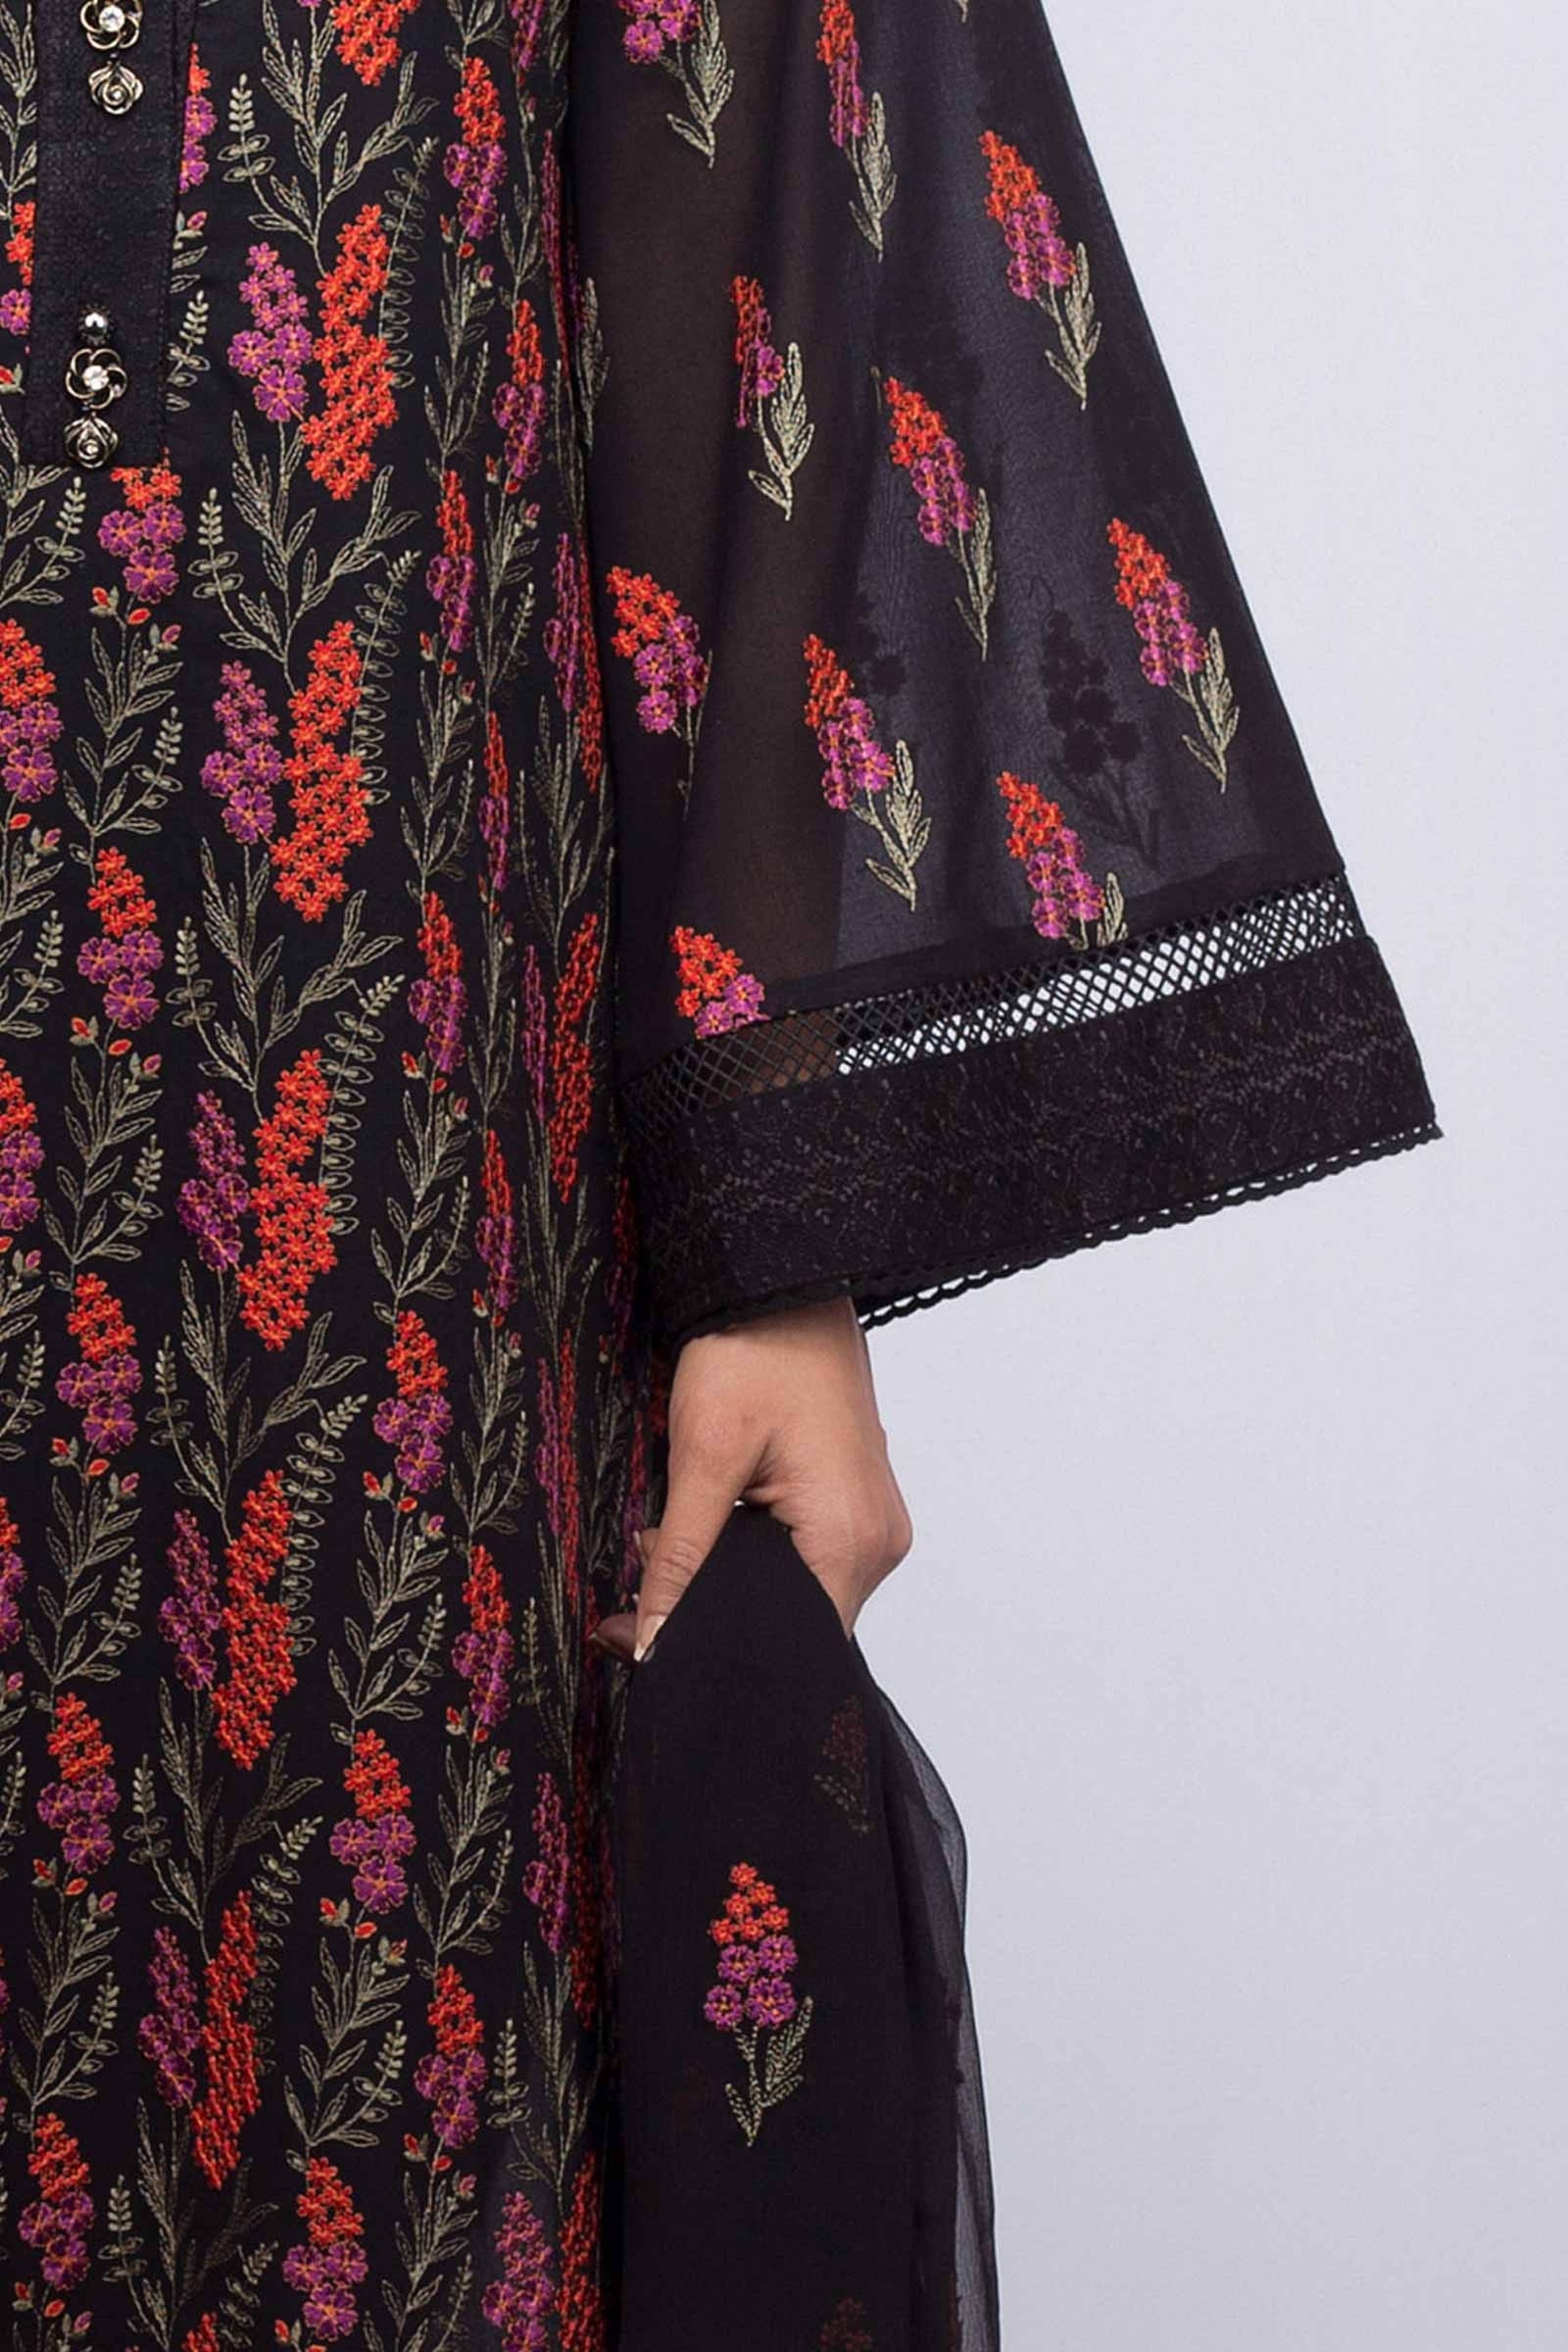 Unstitched Black Pakistani Dress at Bareeze Sale